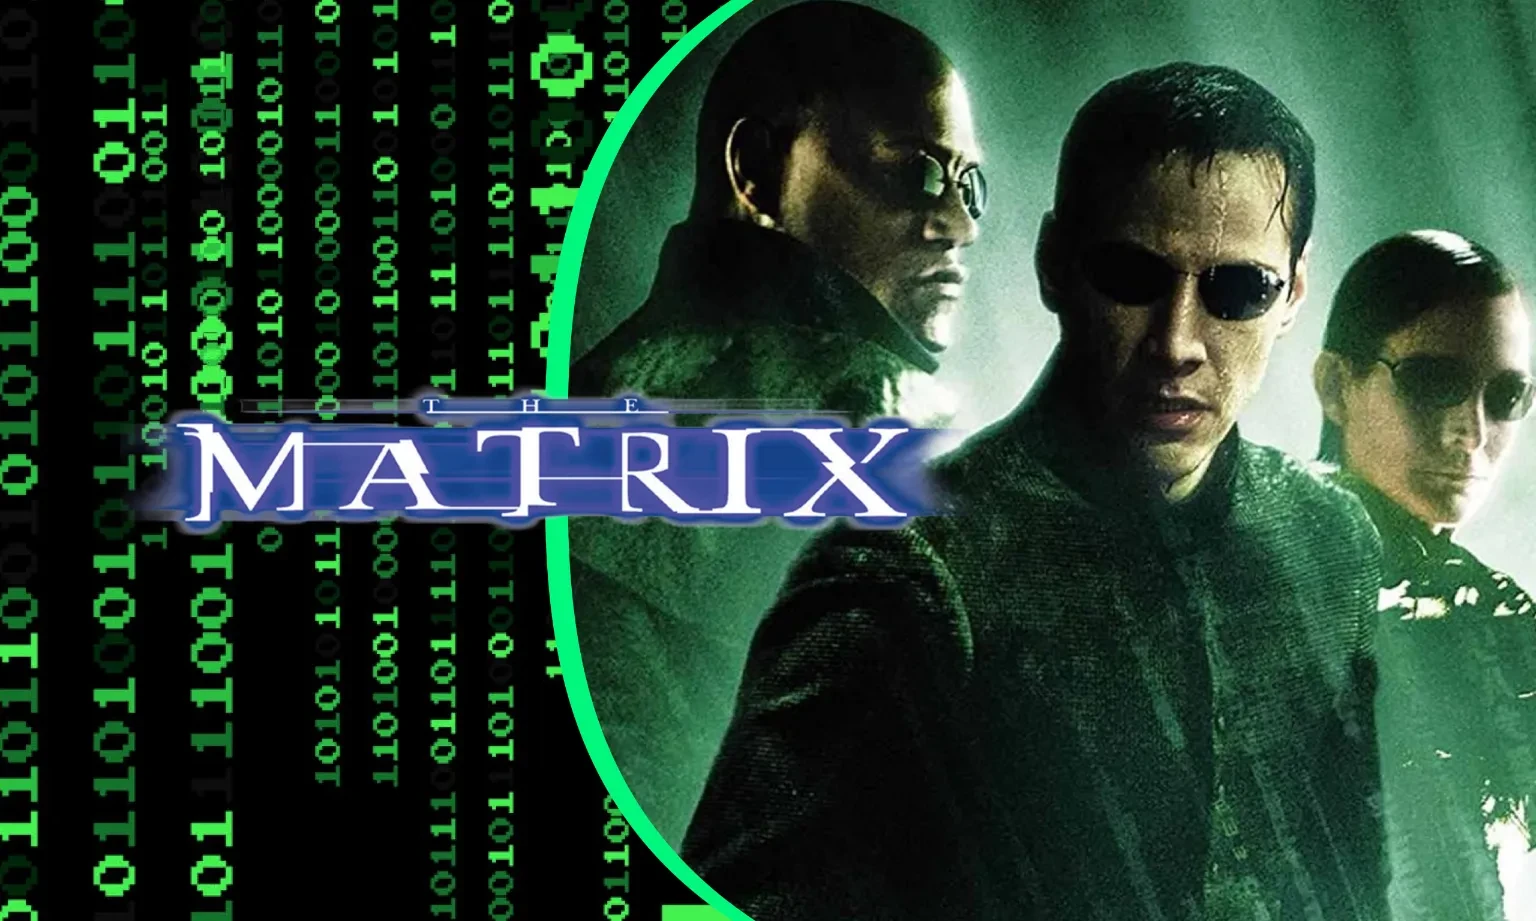 The Matrix is a blockbuster franchise